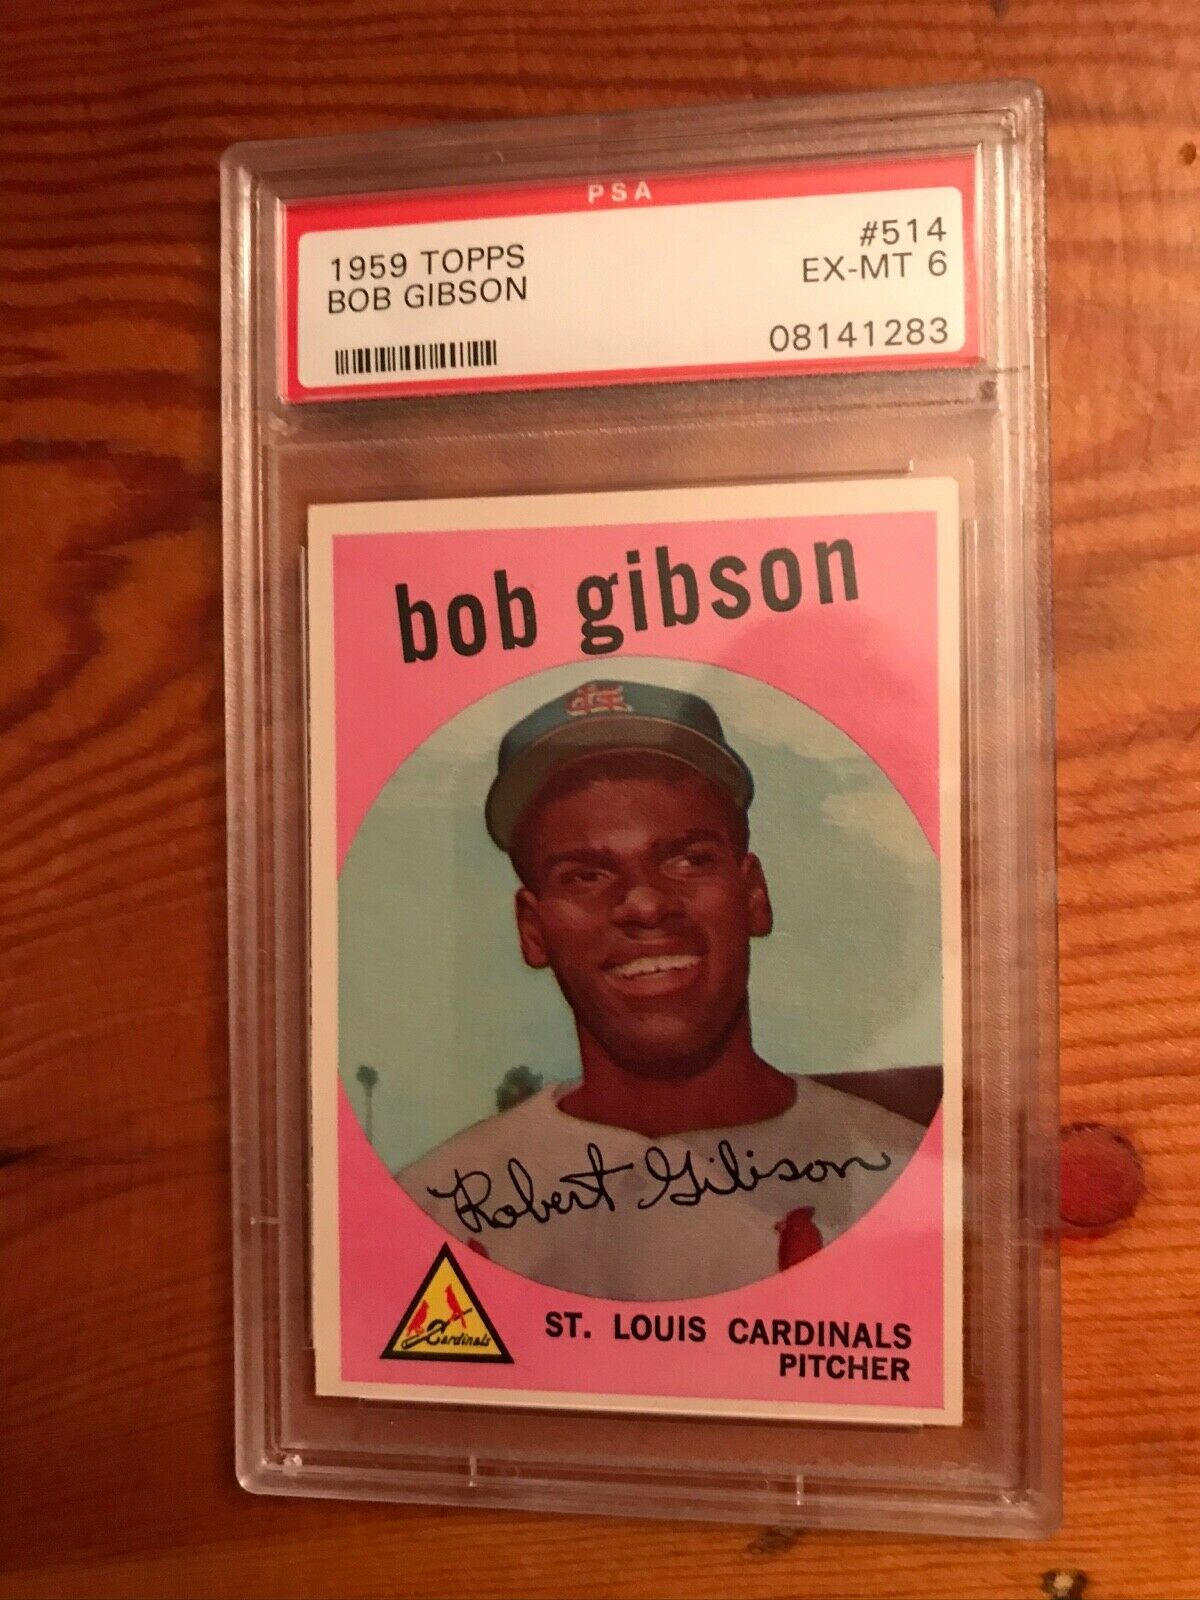 1959 TOPPS 514 BOB GIBSON PSA 6 EXMT CARDINALS ROOKIE GRADED BASEBALL CARD RC